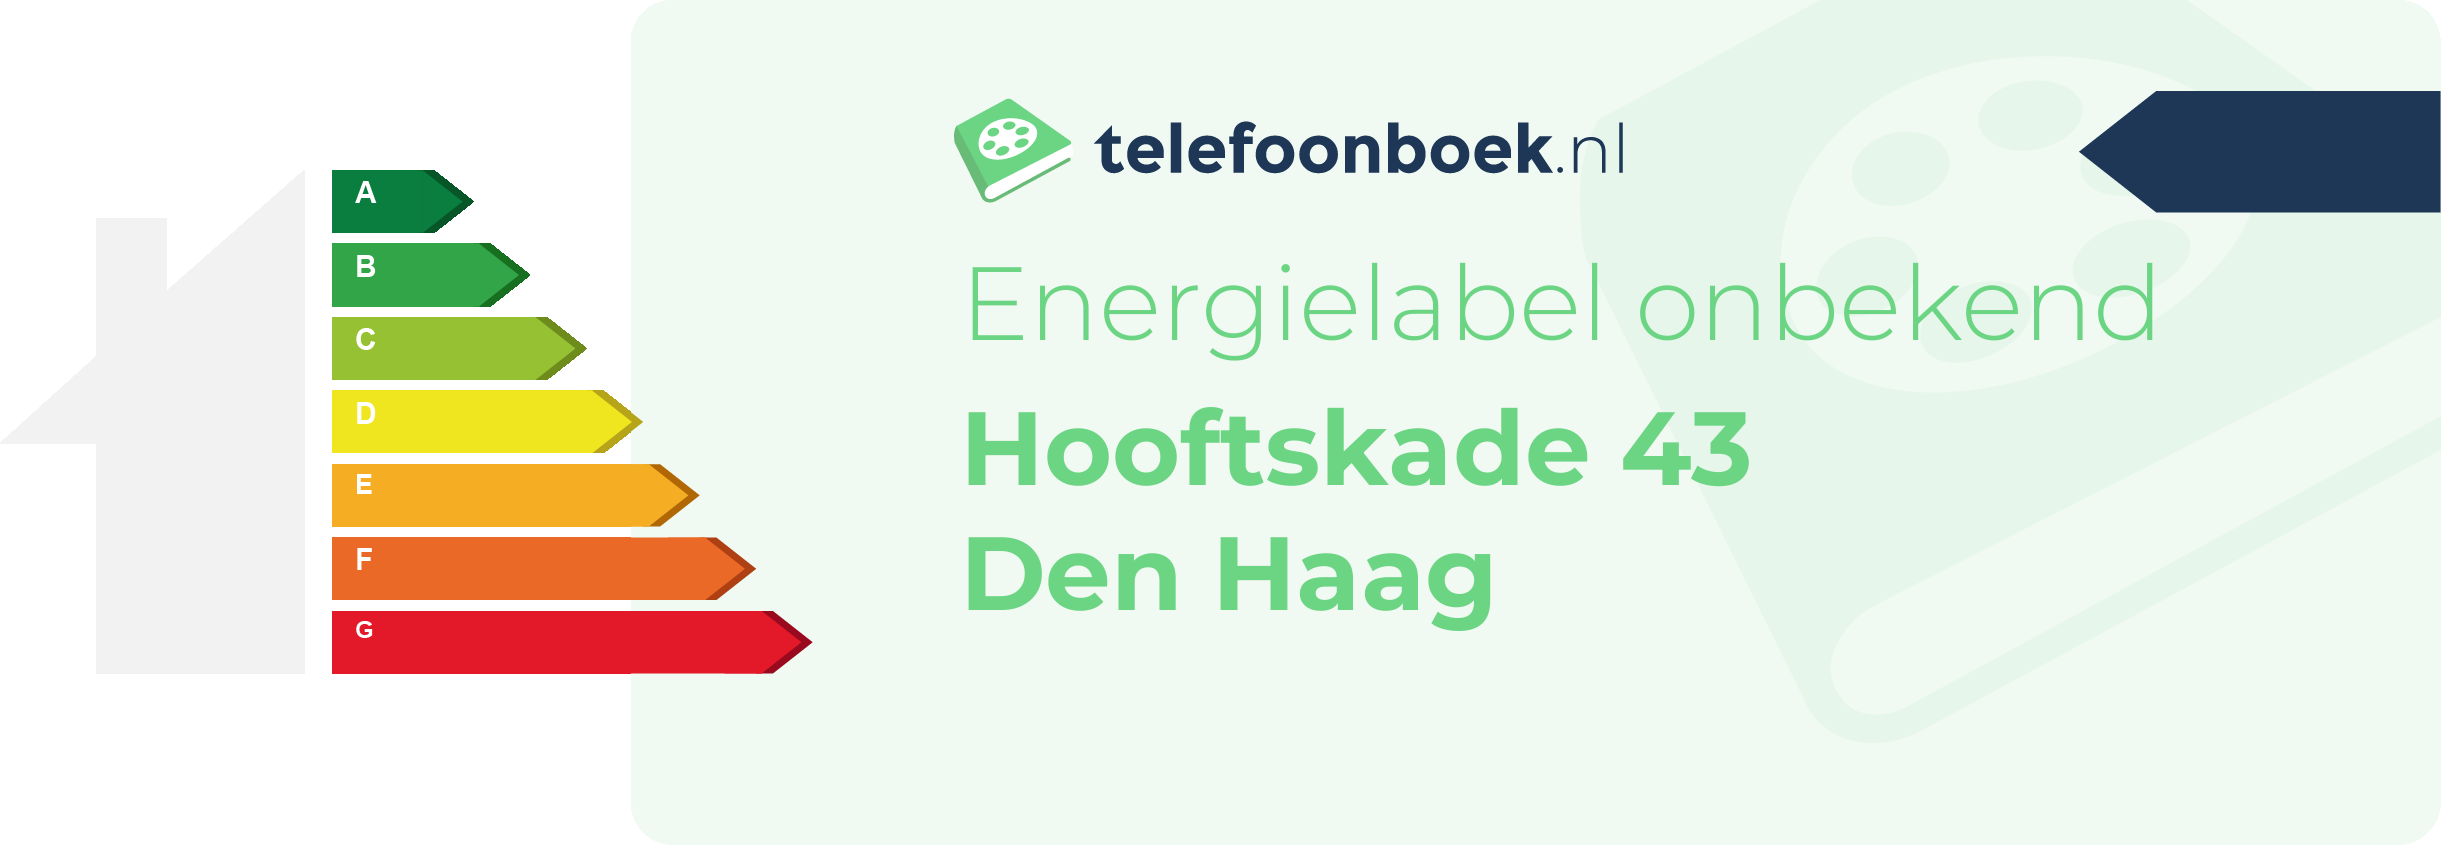 Energielabel Hooftskade 43 Den Haag